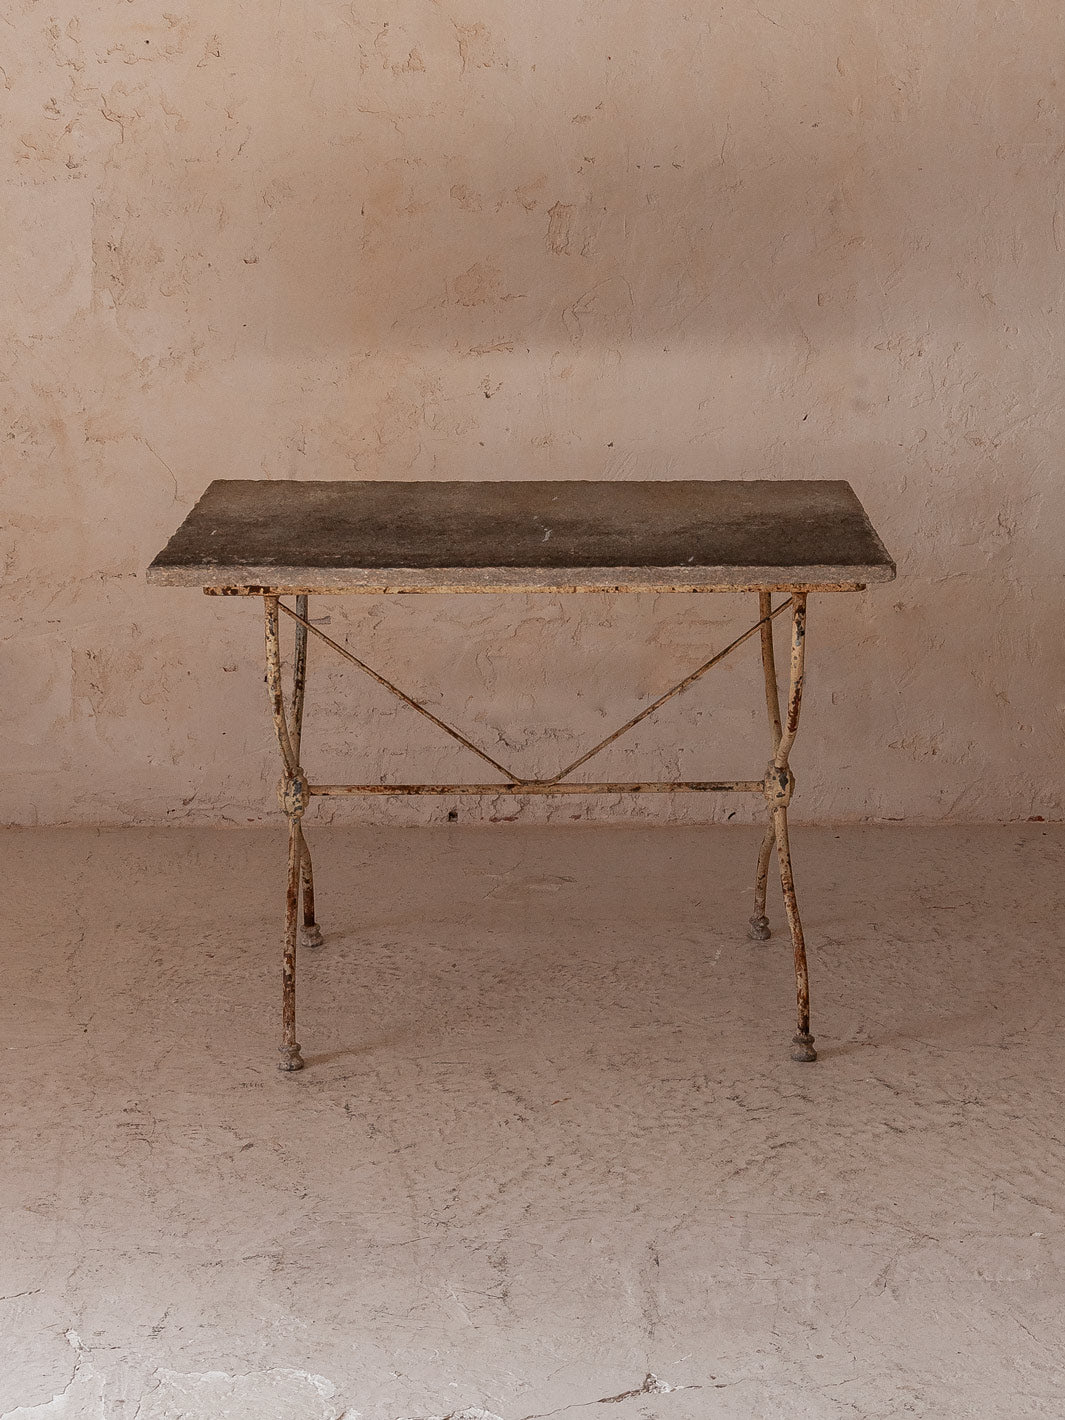 Italian stone table 19th century